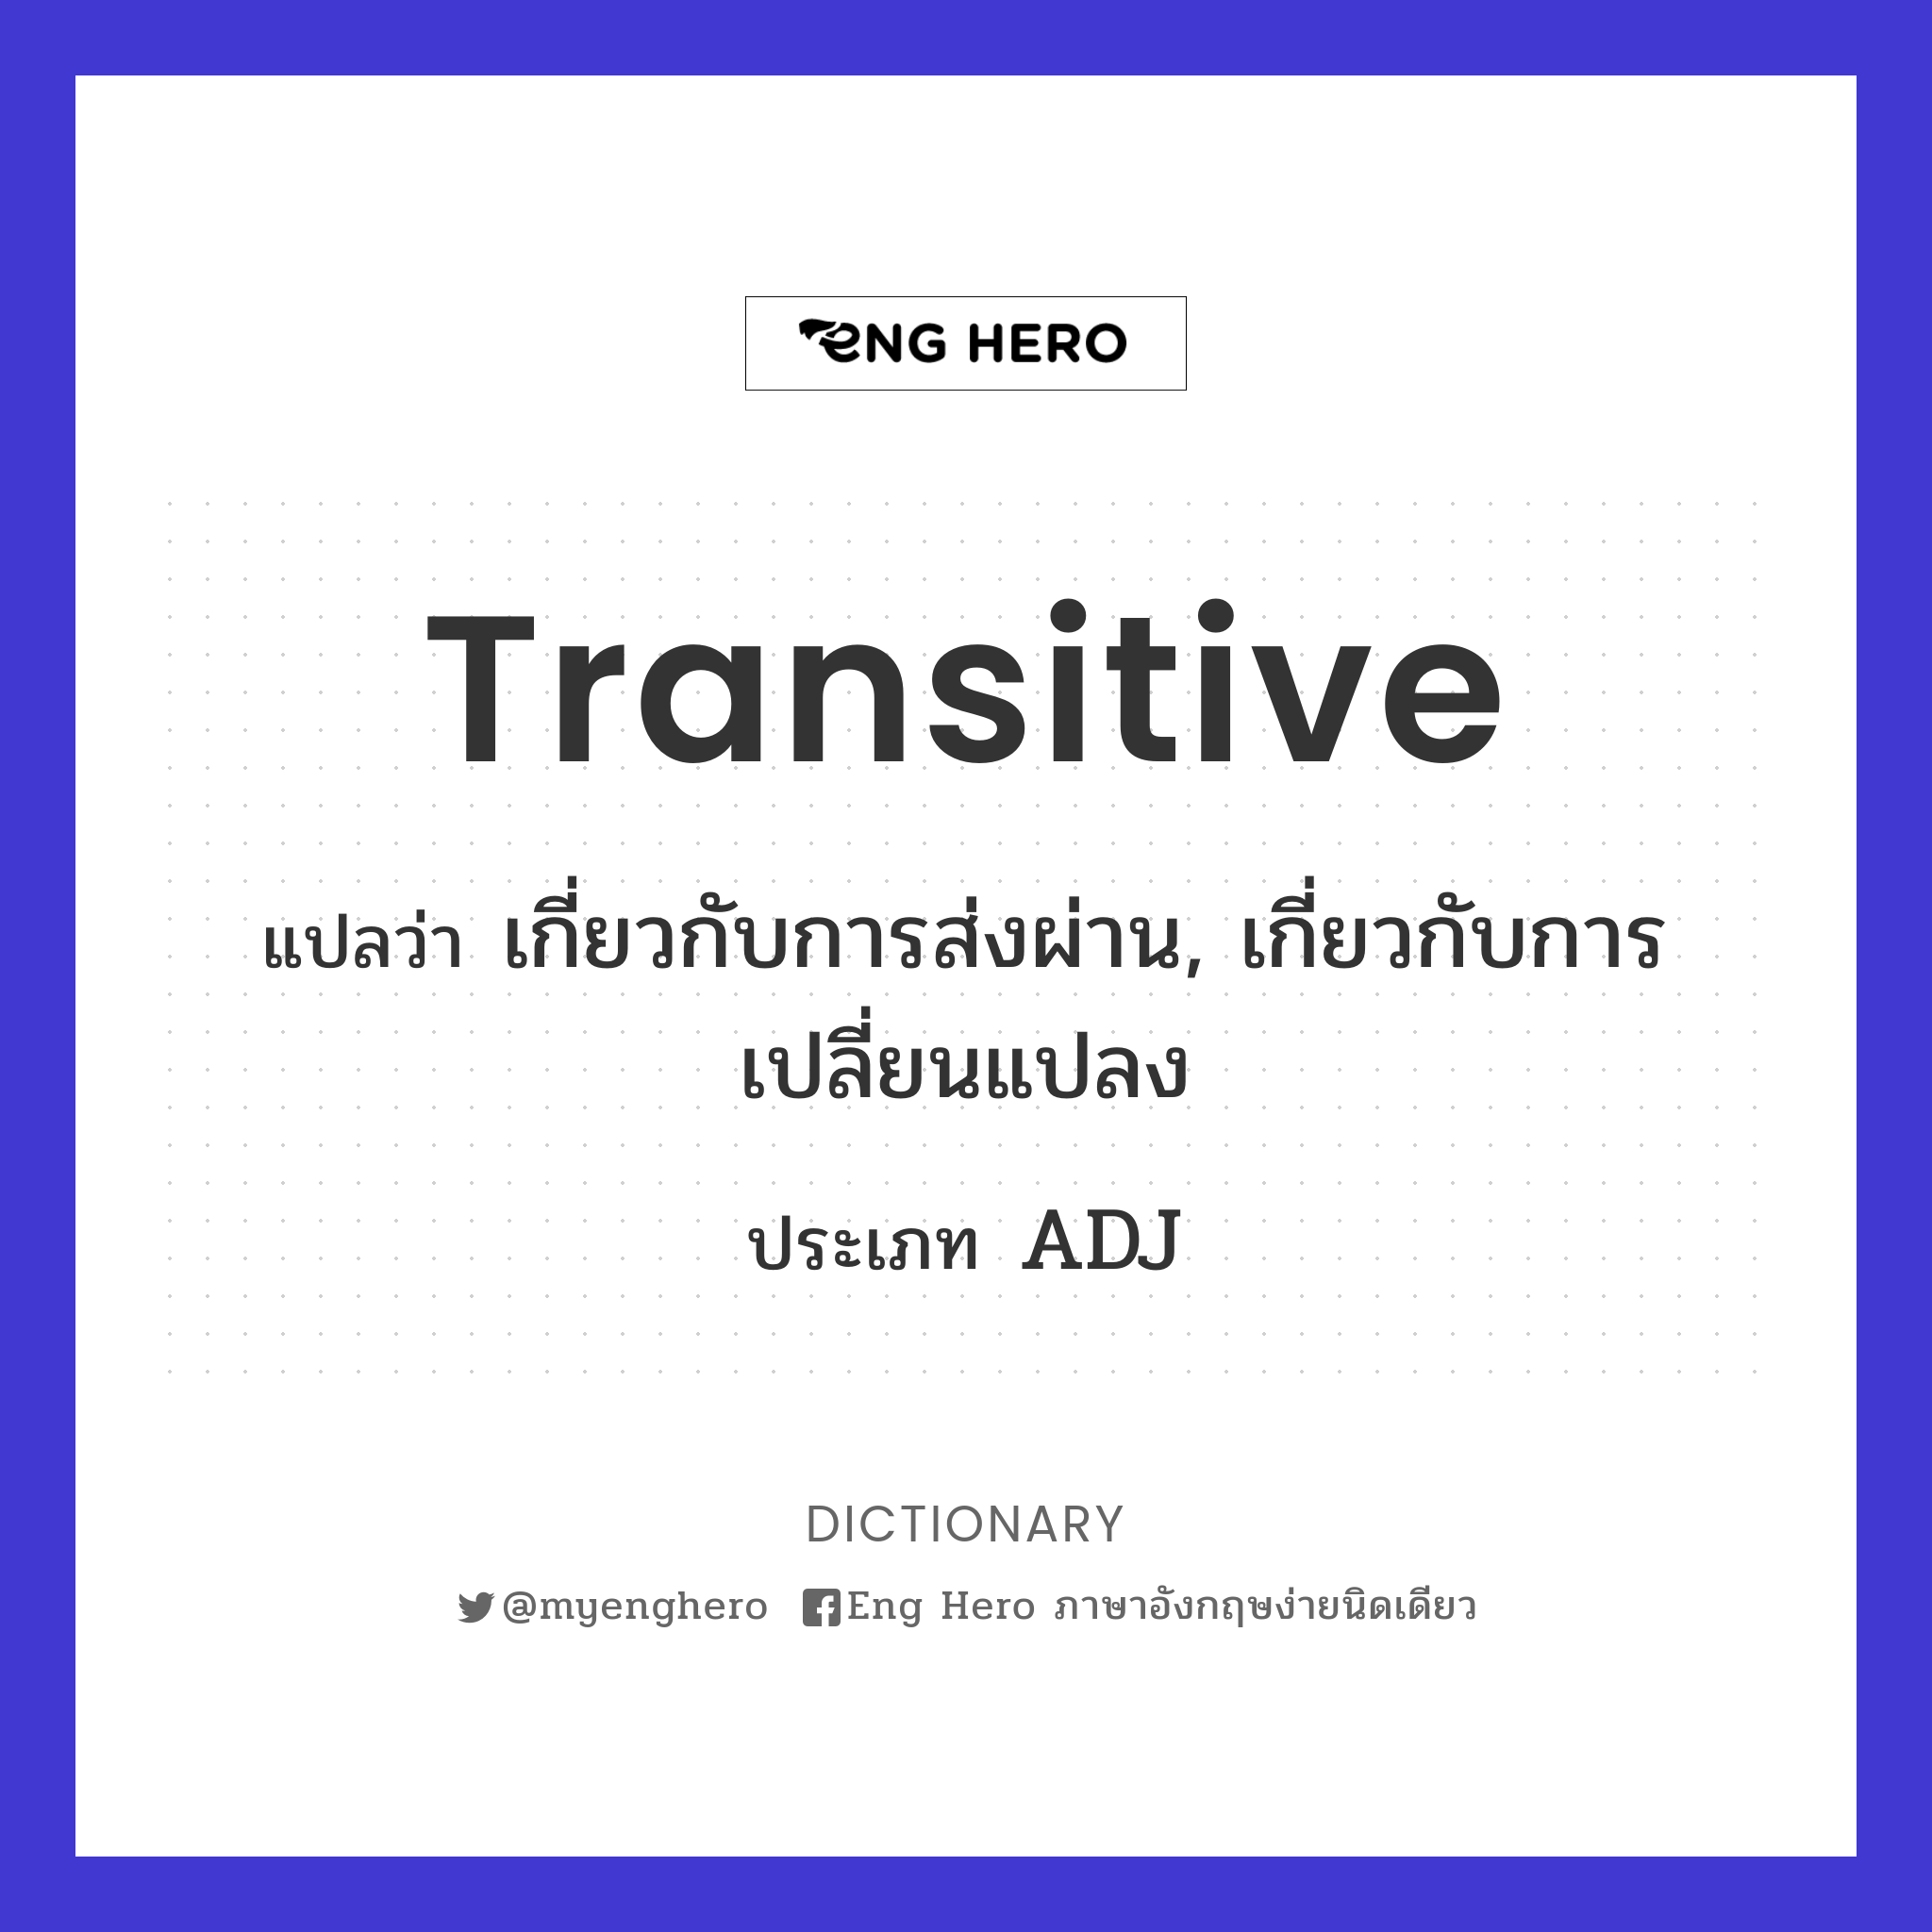 transitive